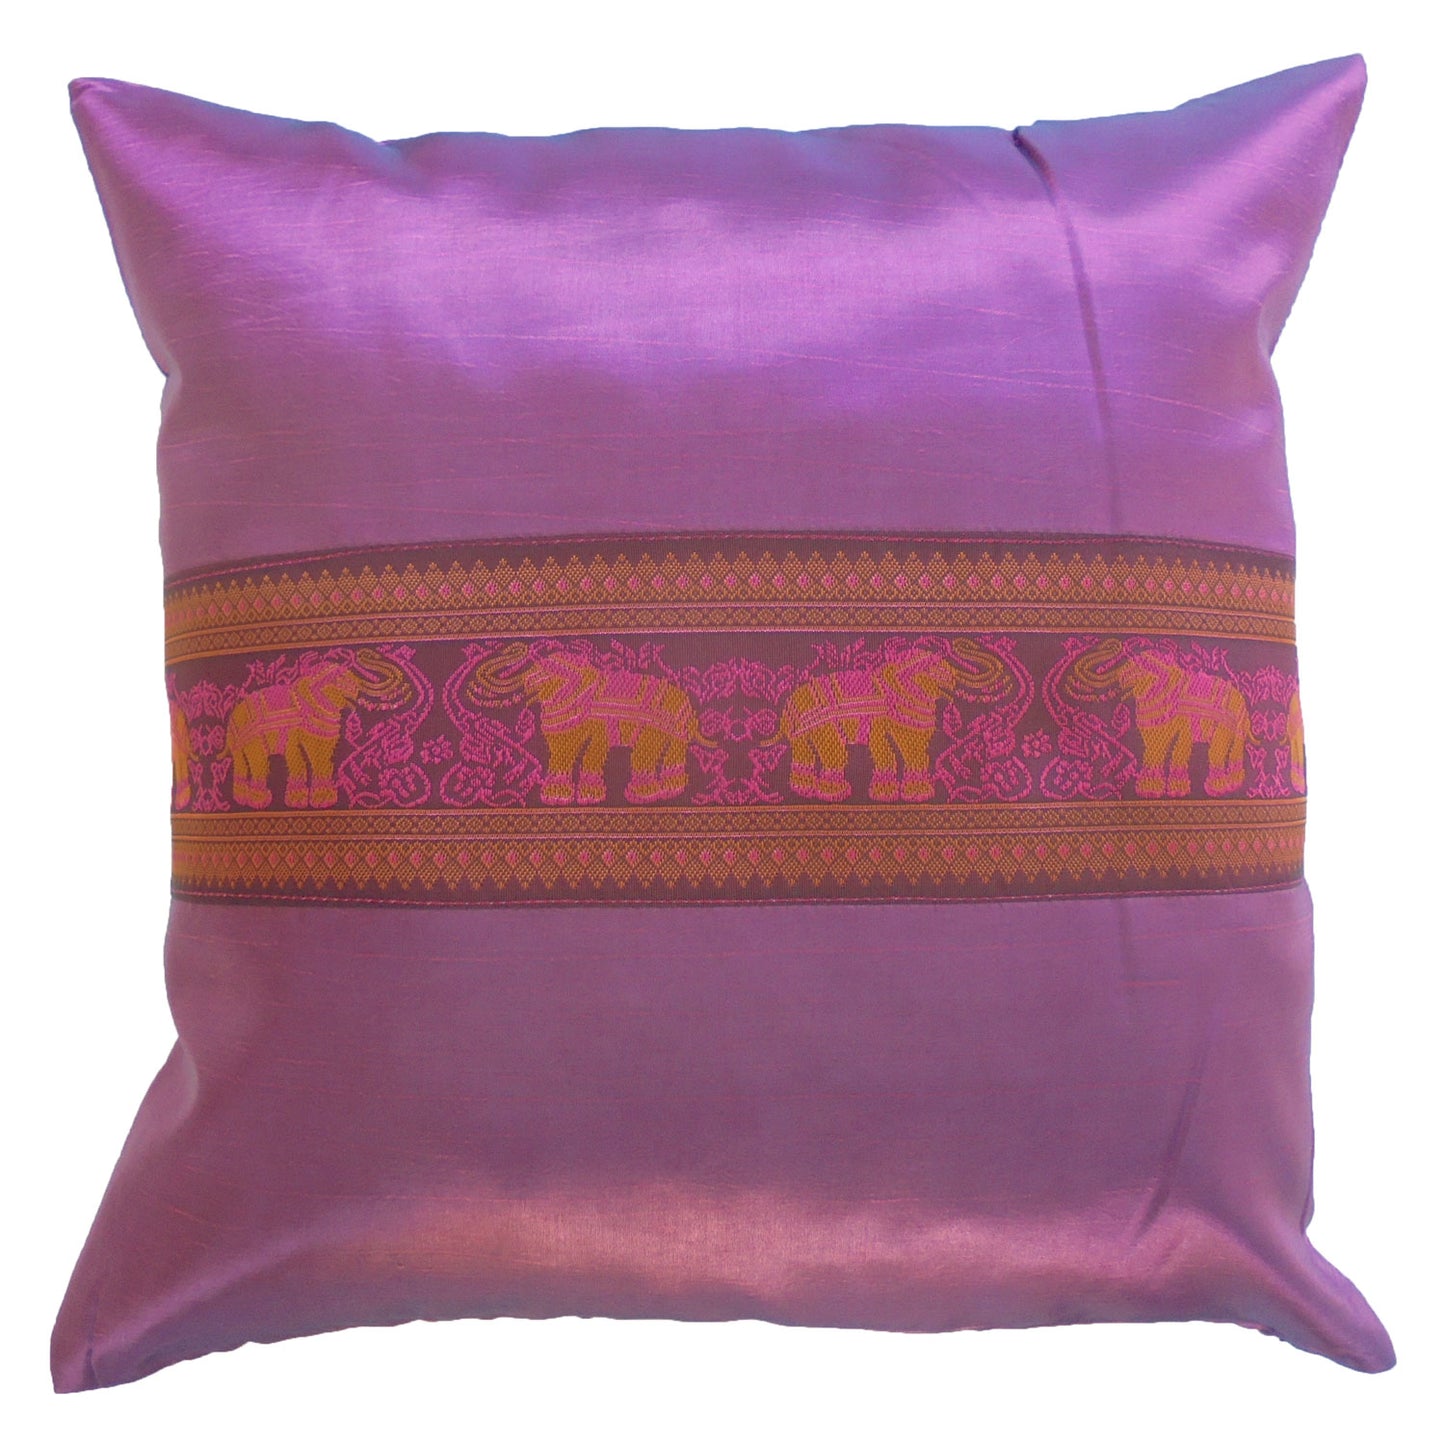 Kissen Kissenbezug Motiv Elefanten bunt verschiedene Farben 40x40cm Thai Seide Sofa Bett Gartenstuhl